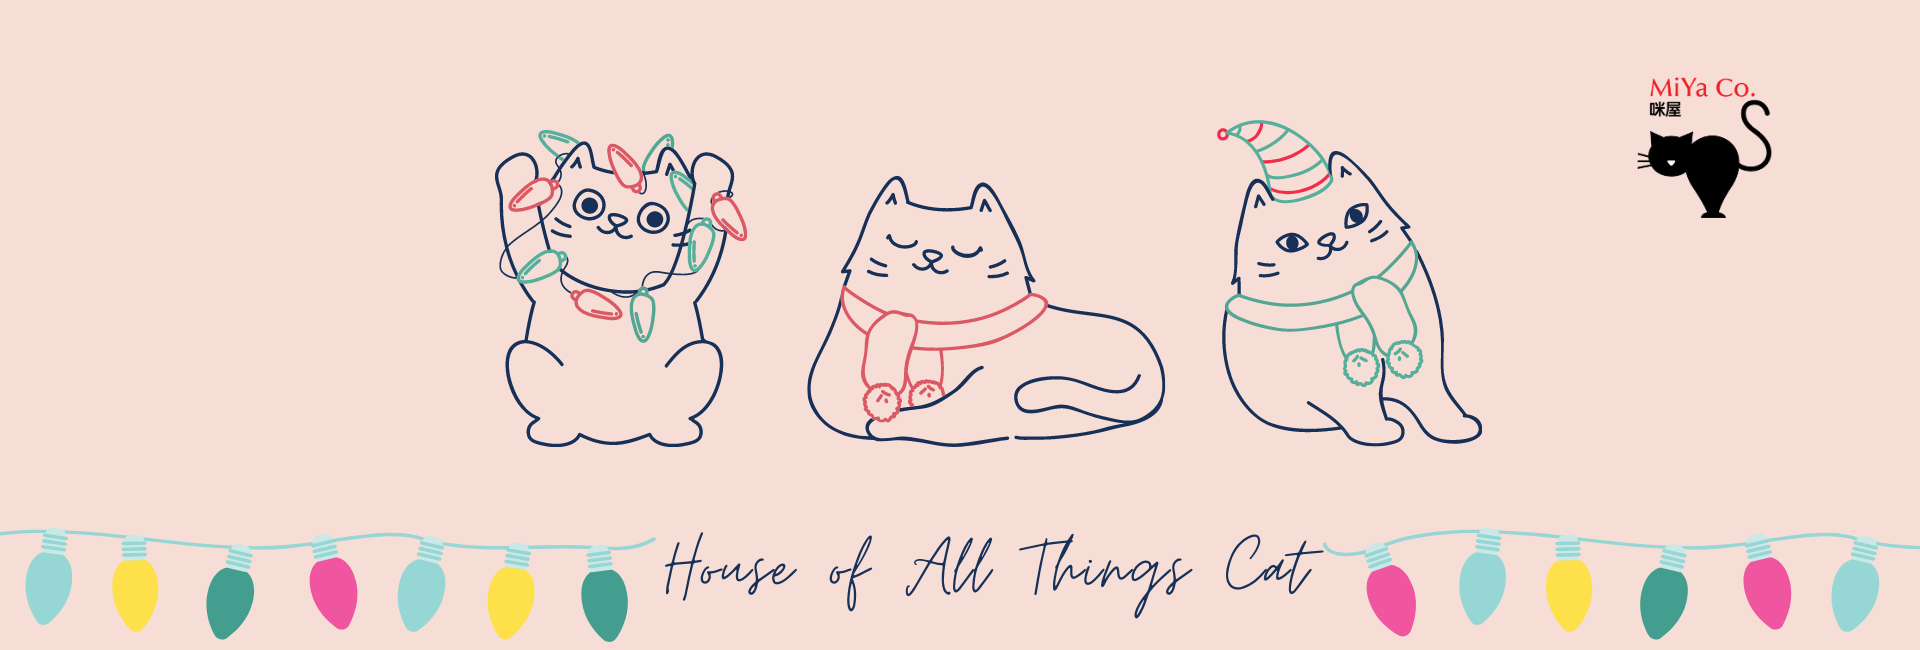 MiYa Co. House of all Things Cat